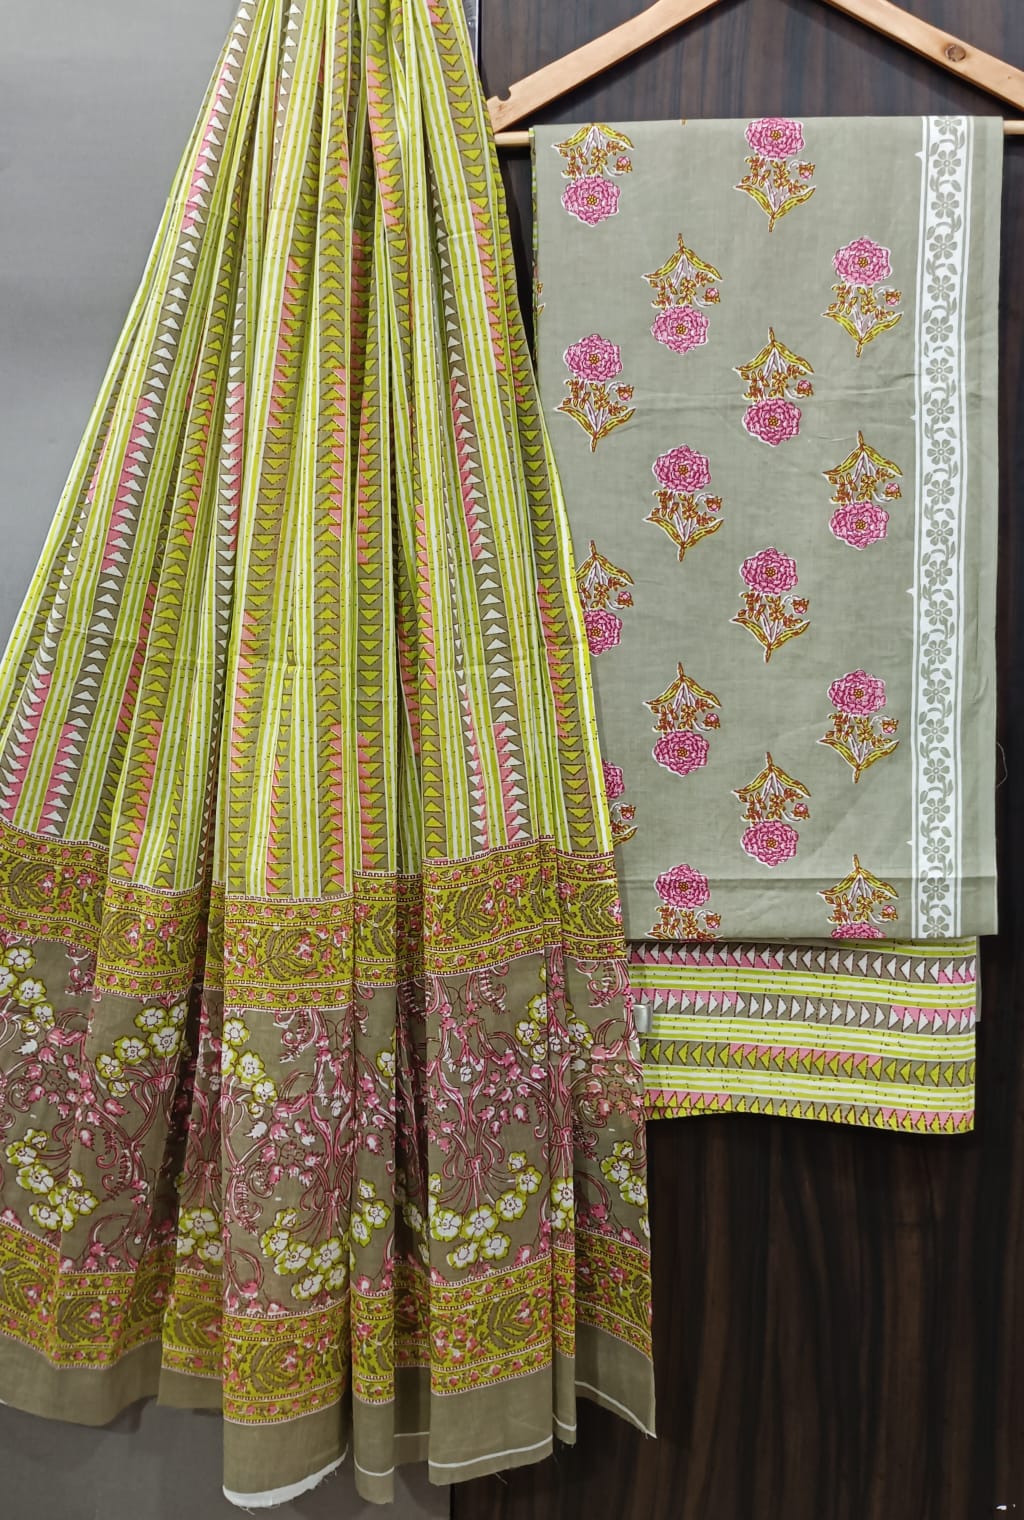 Mayur Creation Jaipuri Vol 6 Cotton Printed Dress Material Jetpur